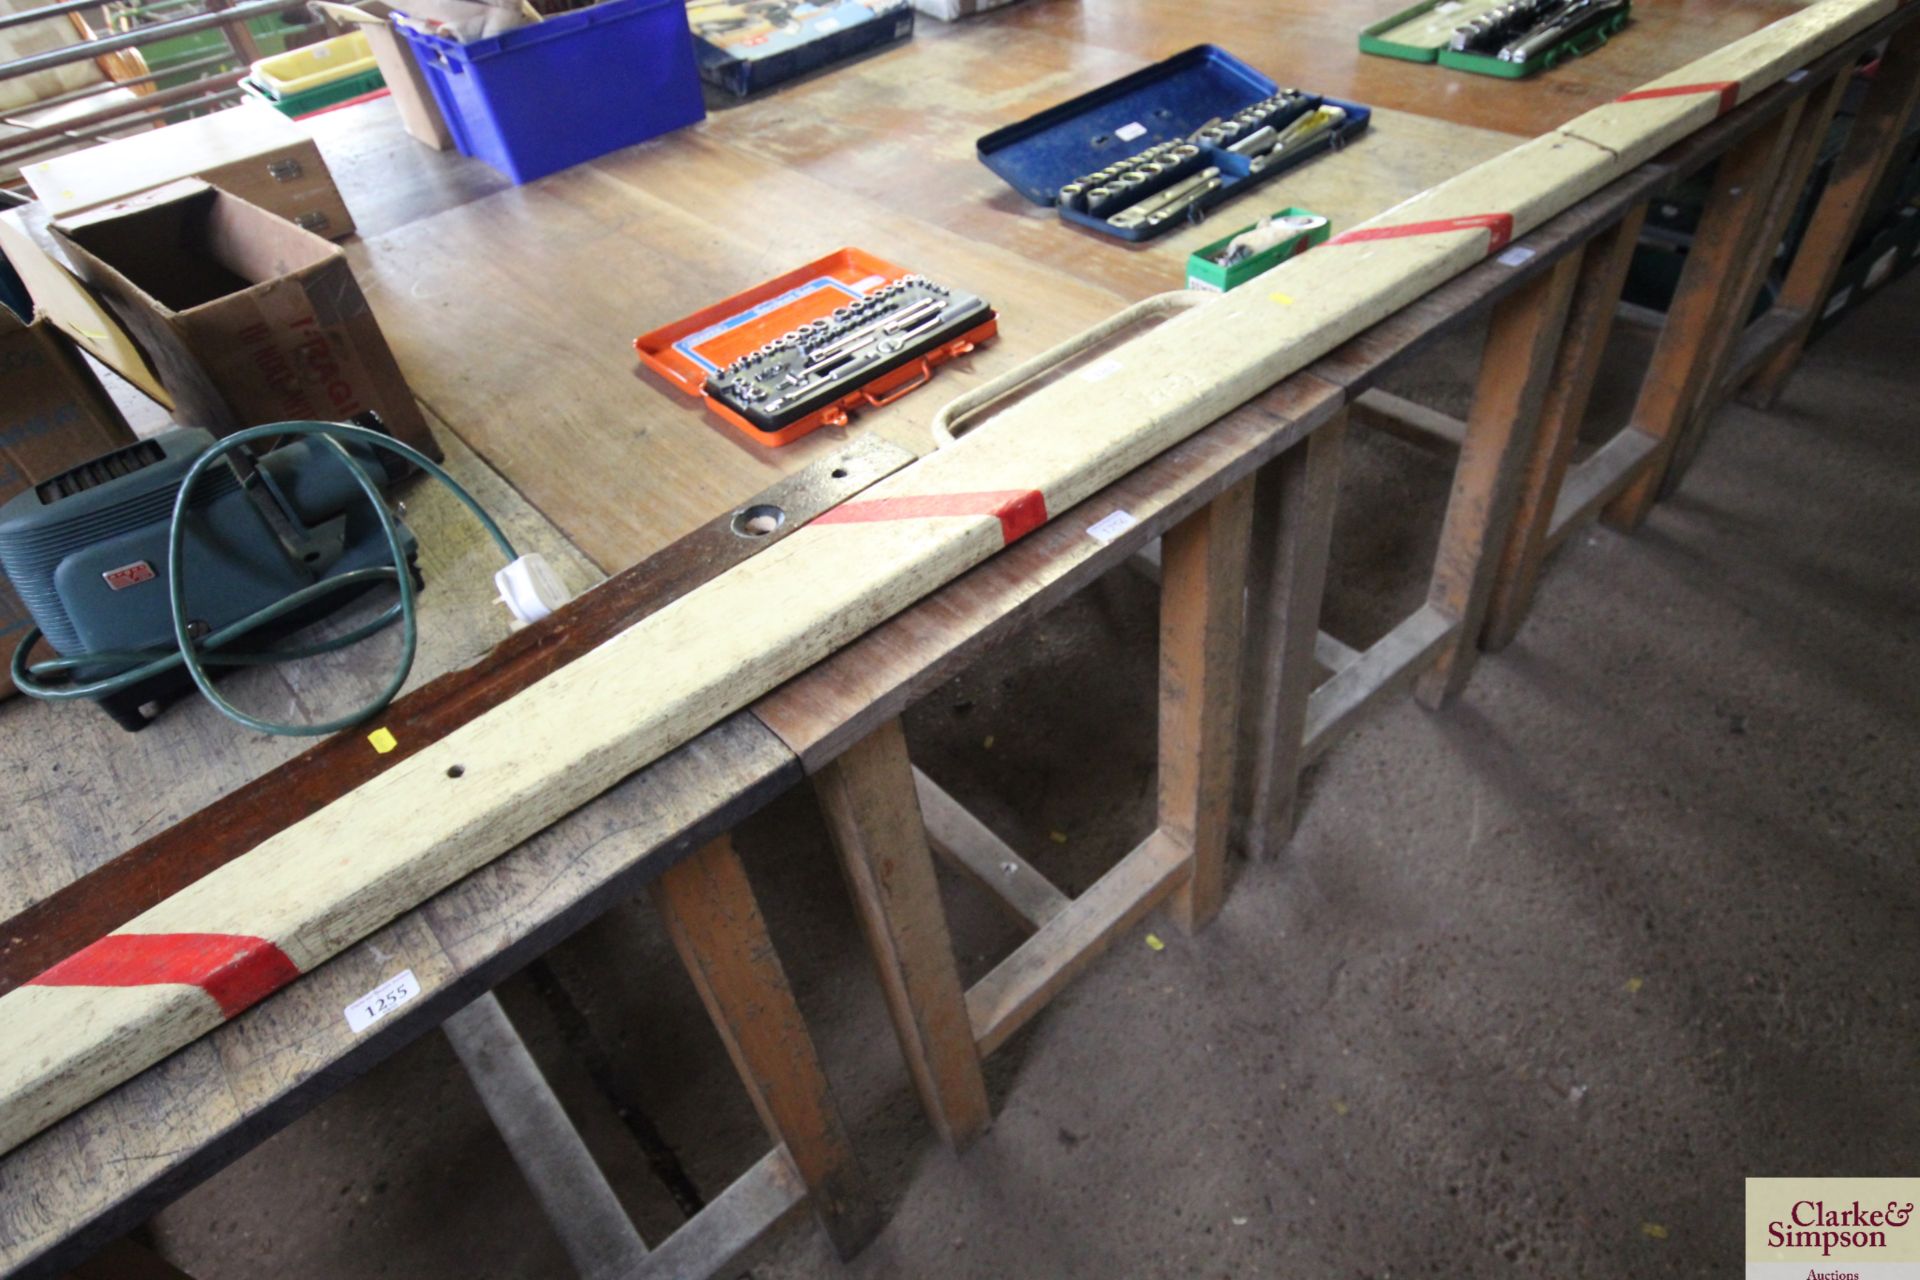 A wooden work bench measuring approx. 24" deep x 4